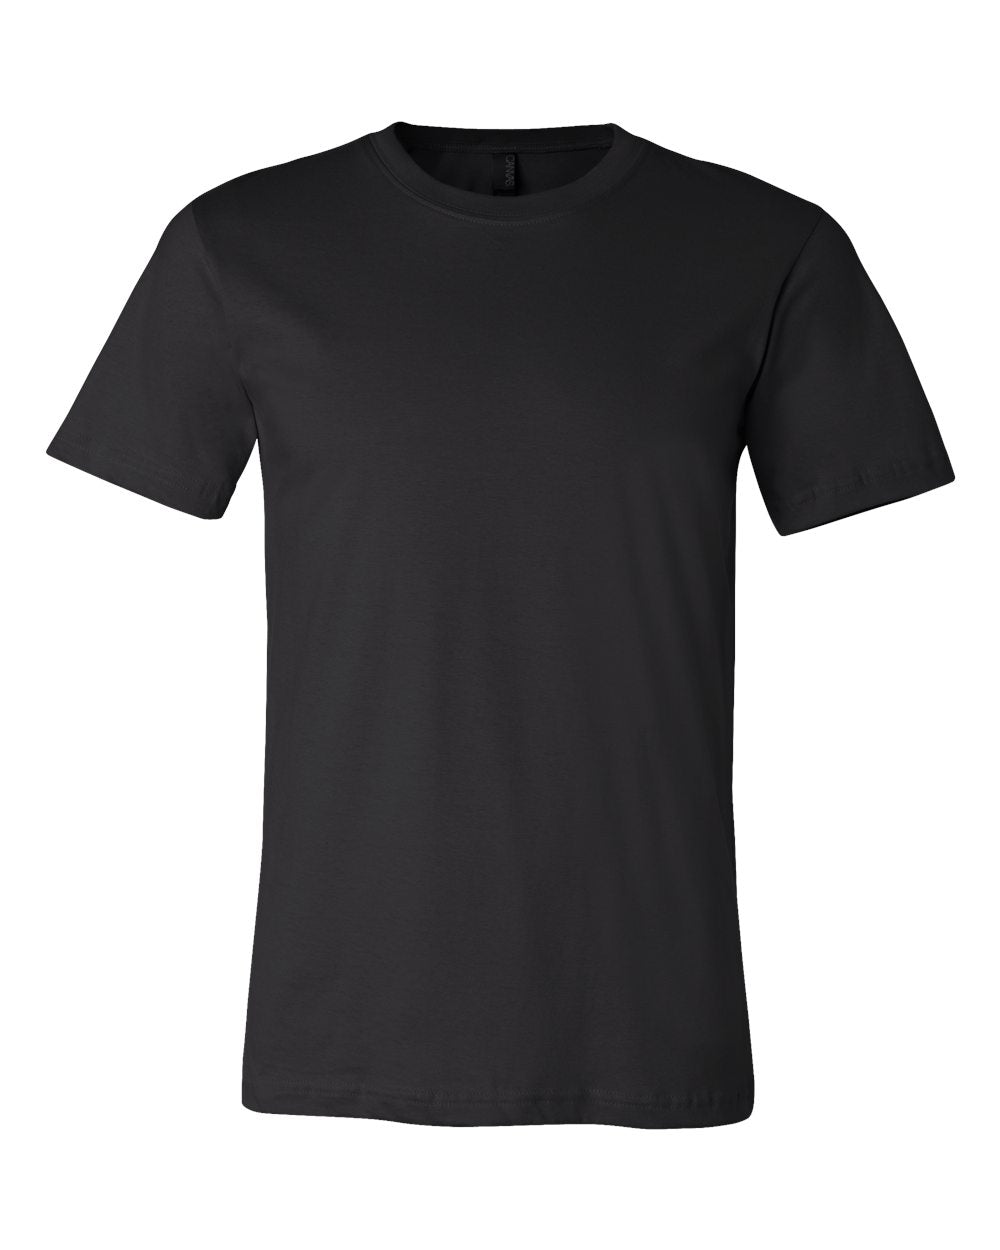 Mens T-Shirt - Design Your Own